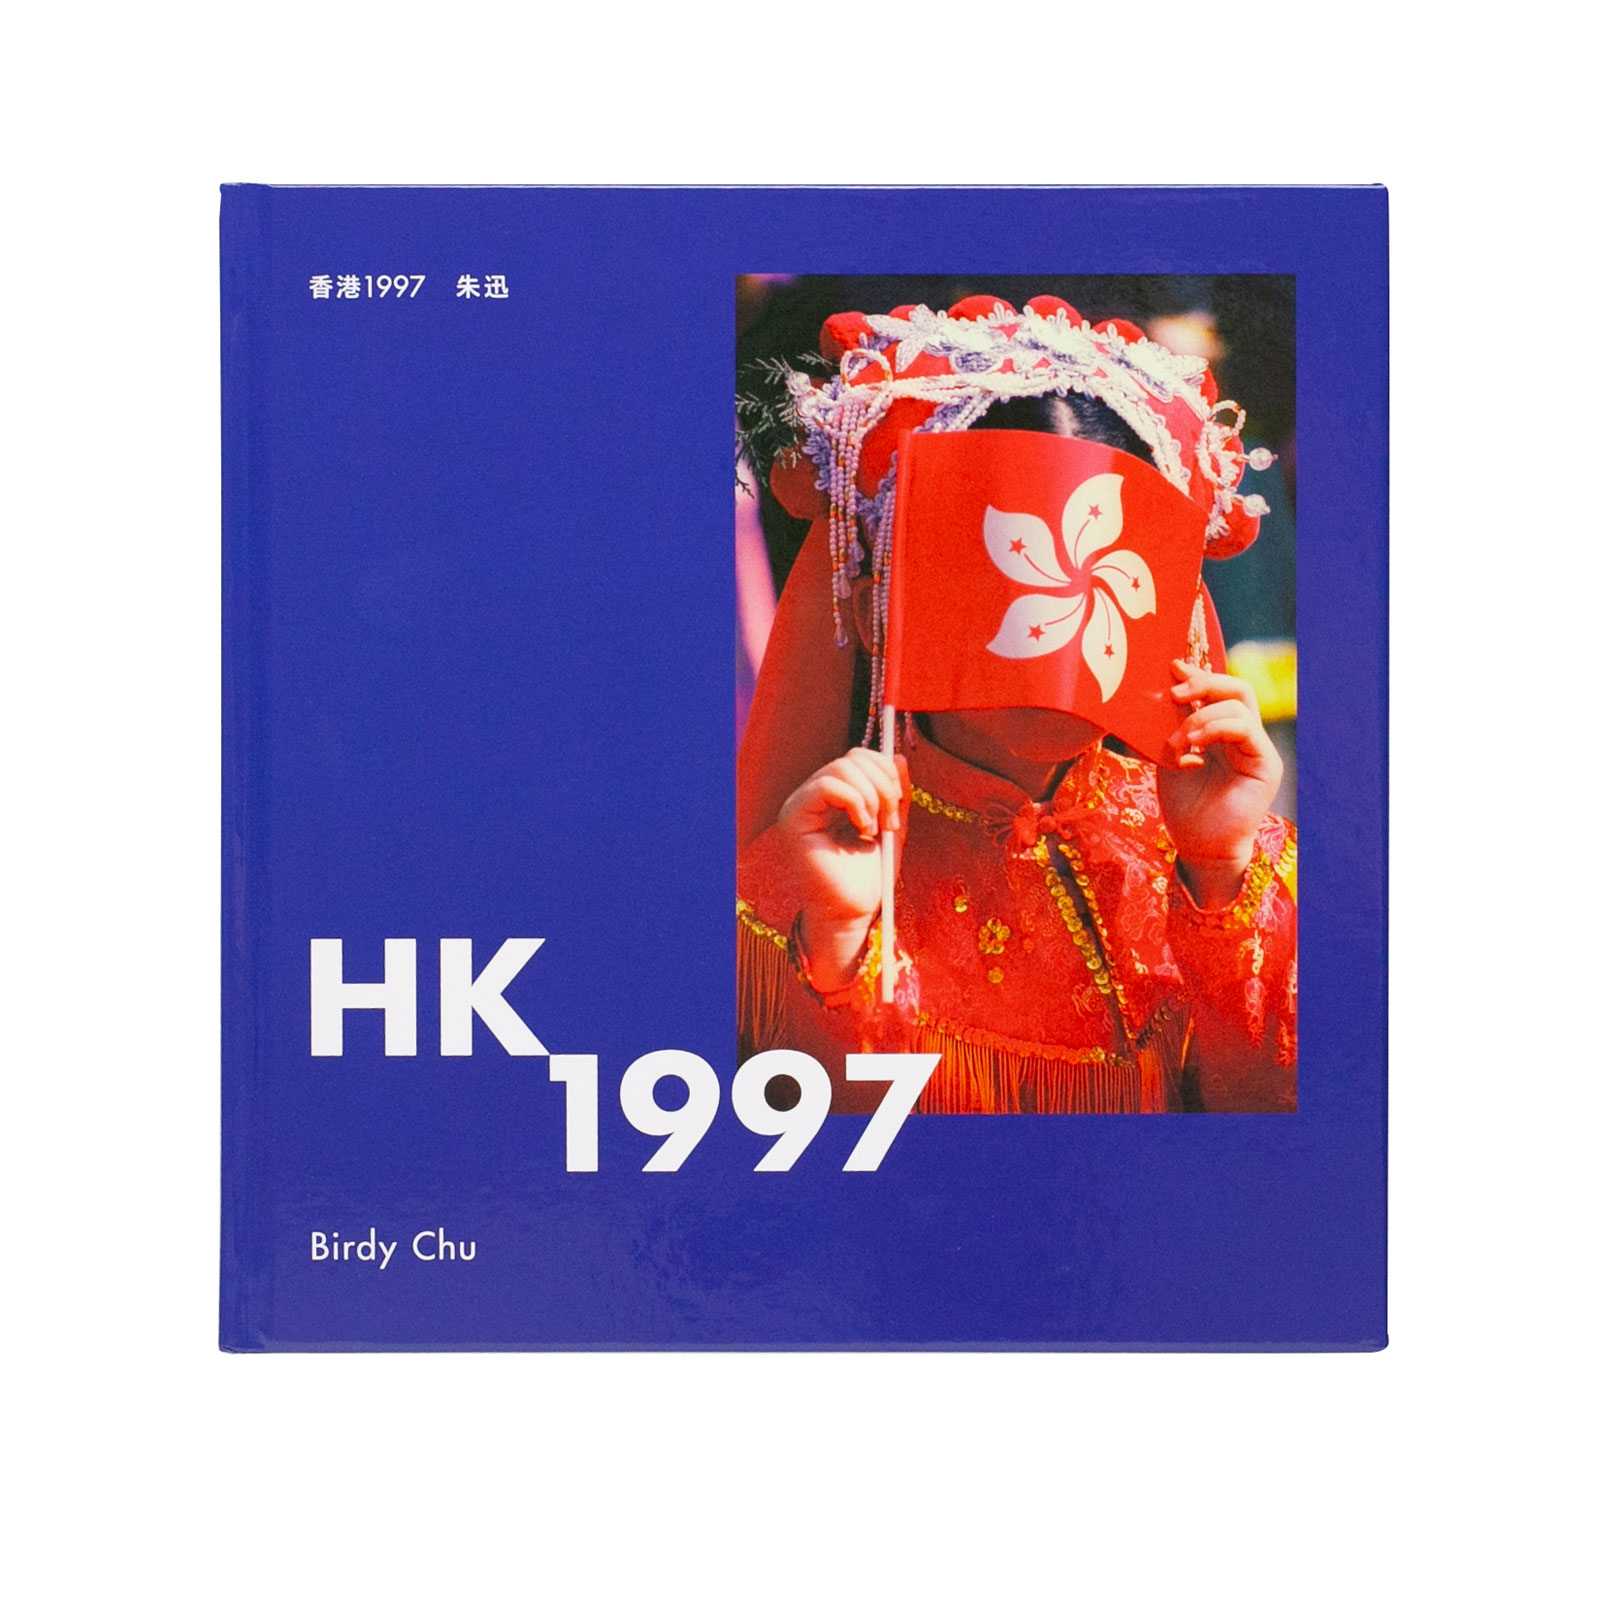 HK1997 cover - HK 1997 - Birdy Chu BOOK |  - HK 1997 - Birdy Chu